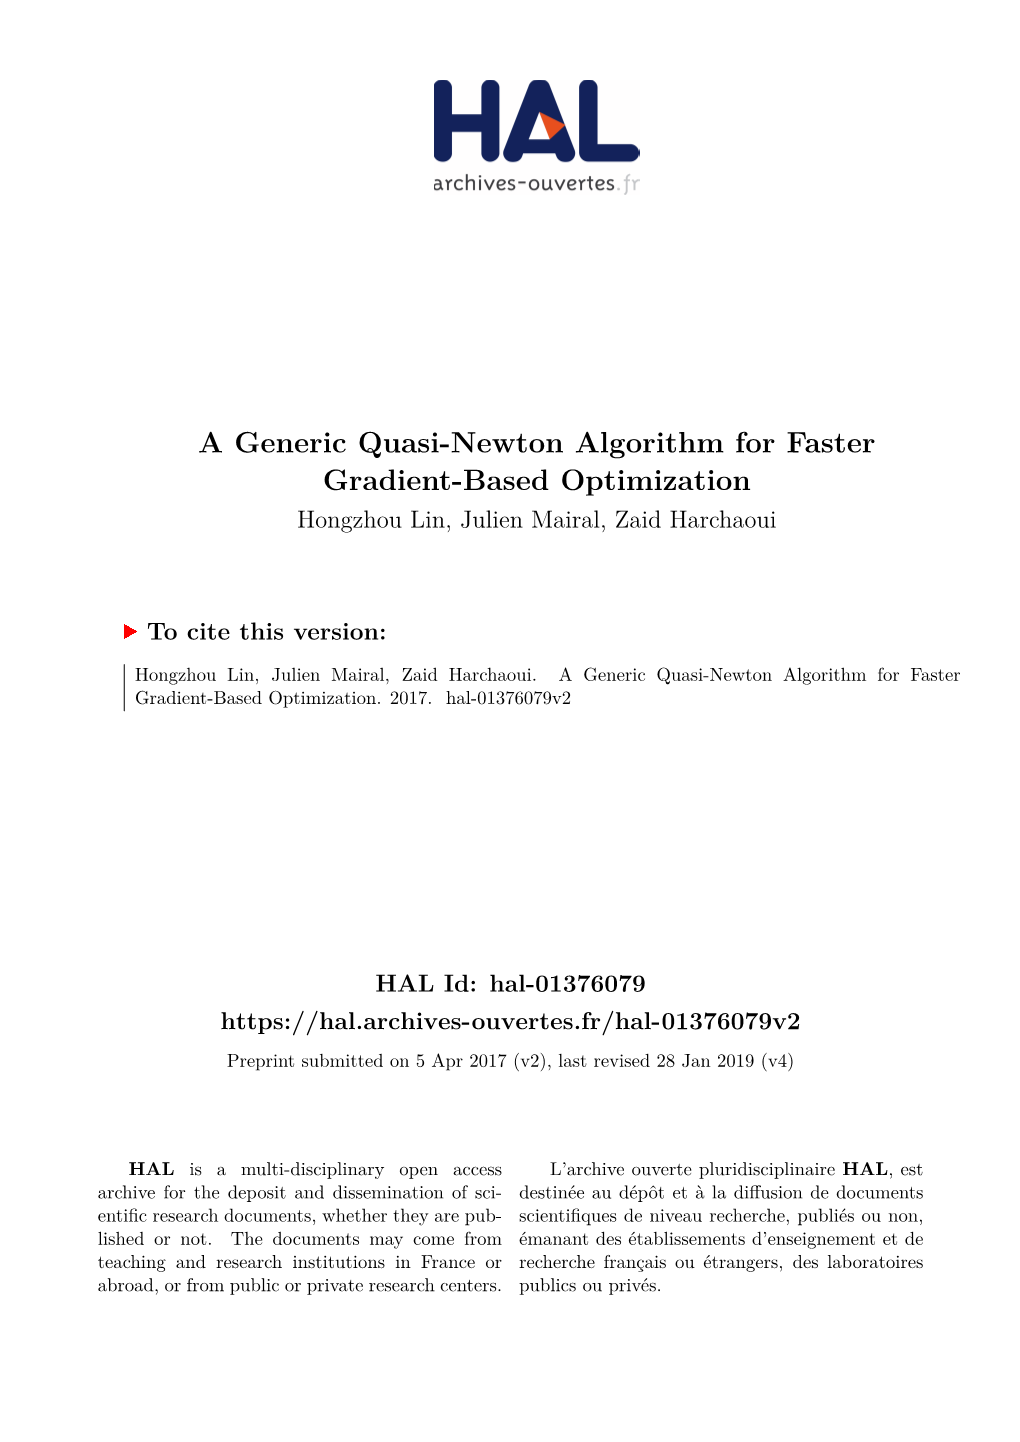 A Generic Quasi-Newton Algorithm for Faster Gradient-Based Optimization Hongzhou Lin, Julien Mairal, Zaid Harchaoui